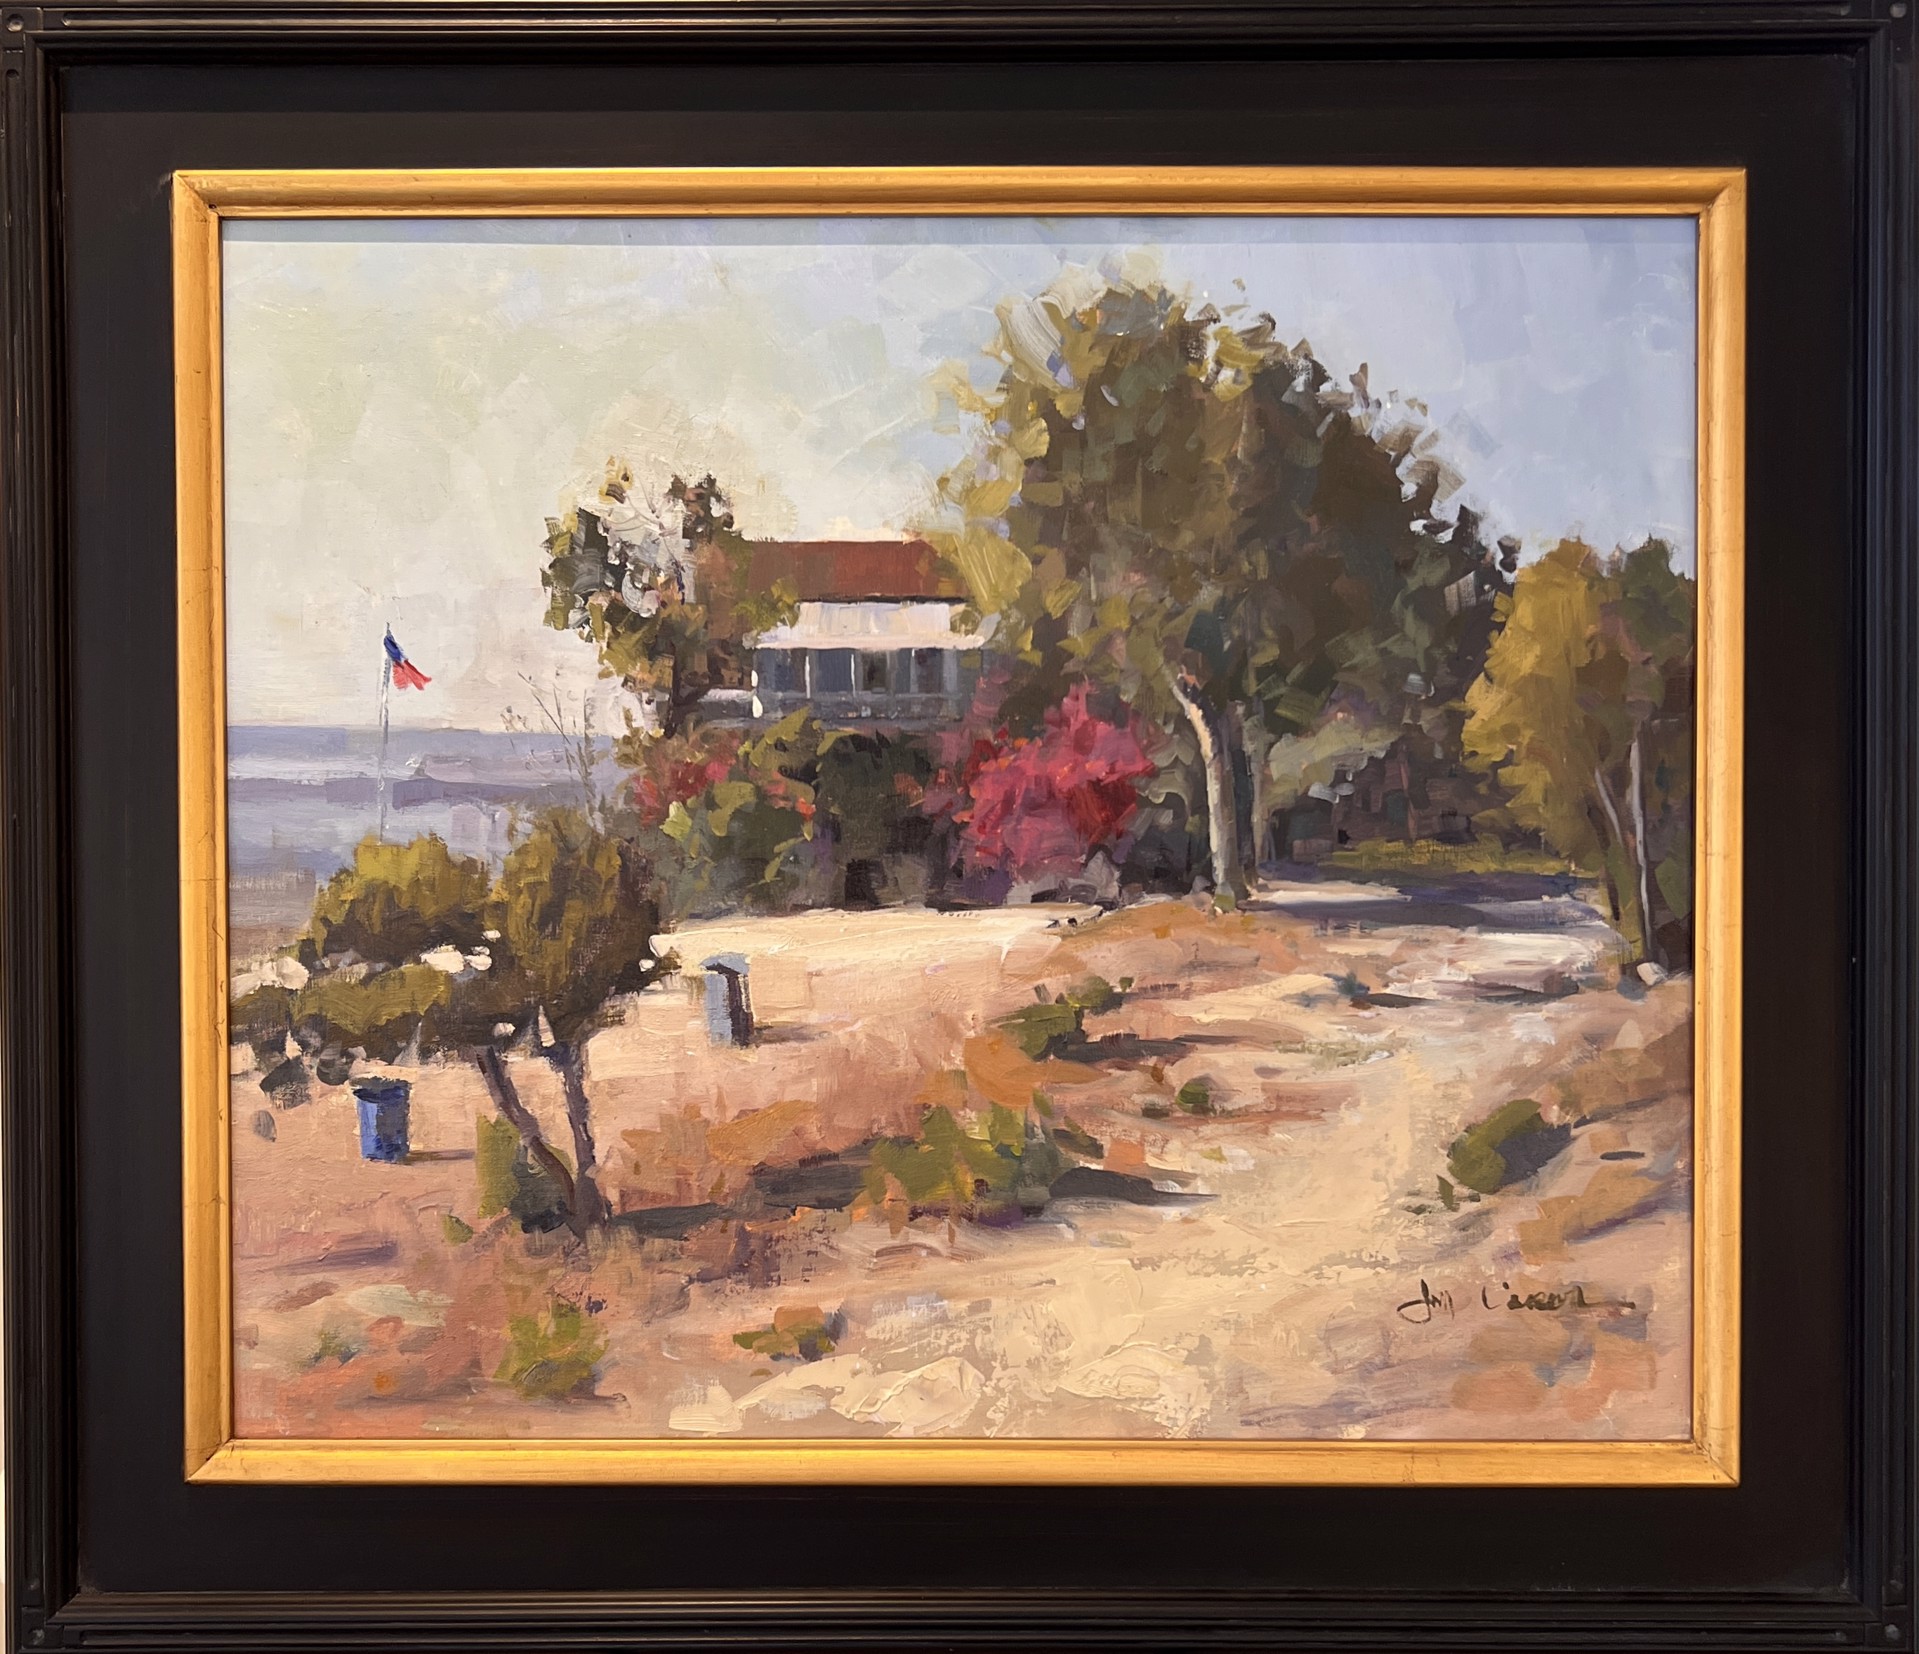 "Patriot Beach" original oil painting by Jim Carson